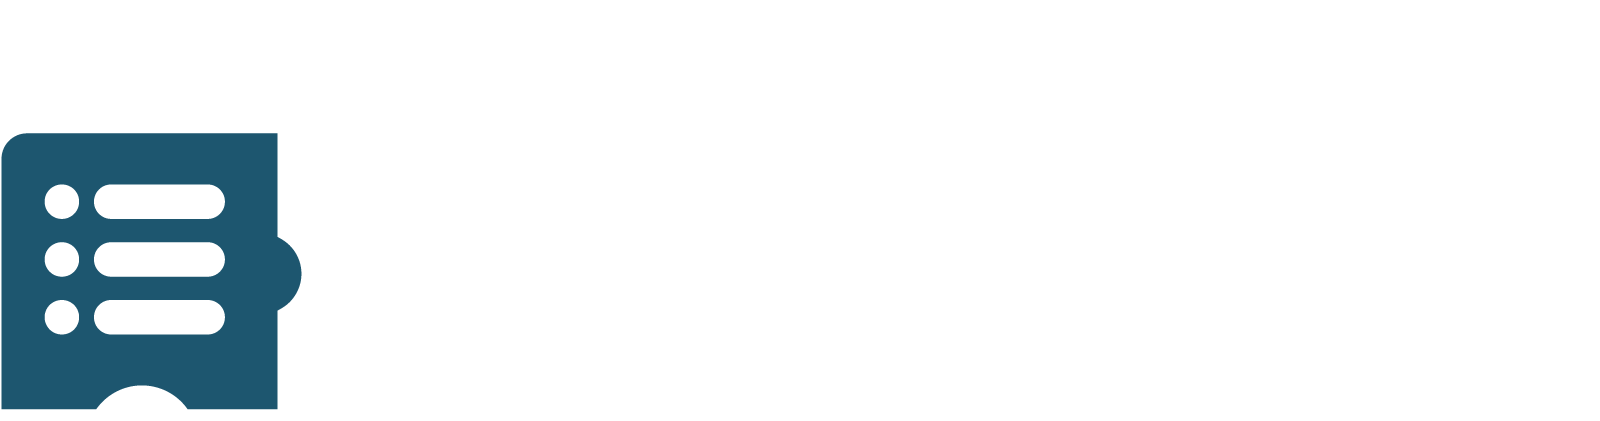 Mpower-Menus-logo-white-text